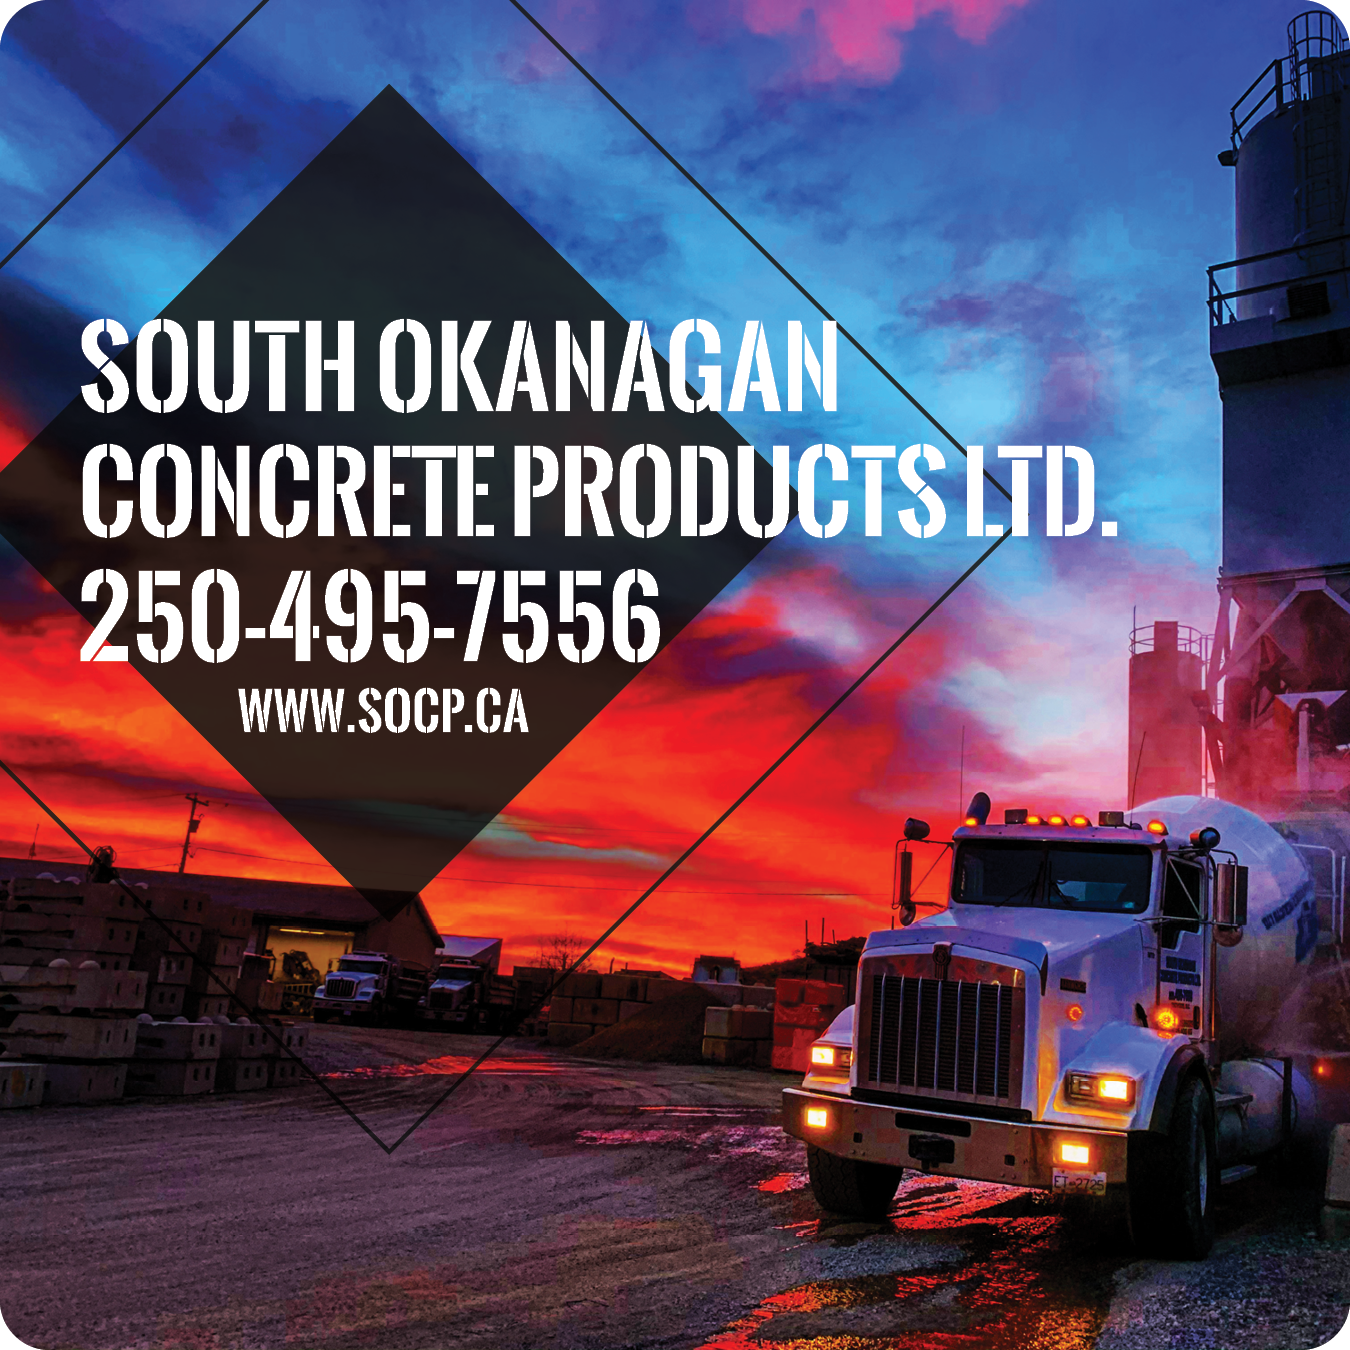 South Okanagan Concrete Products Ltd